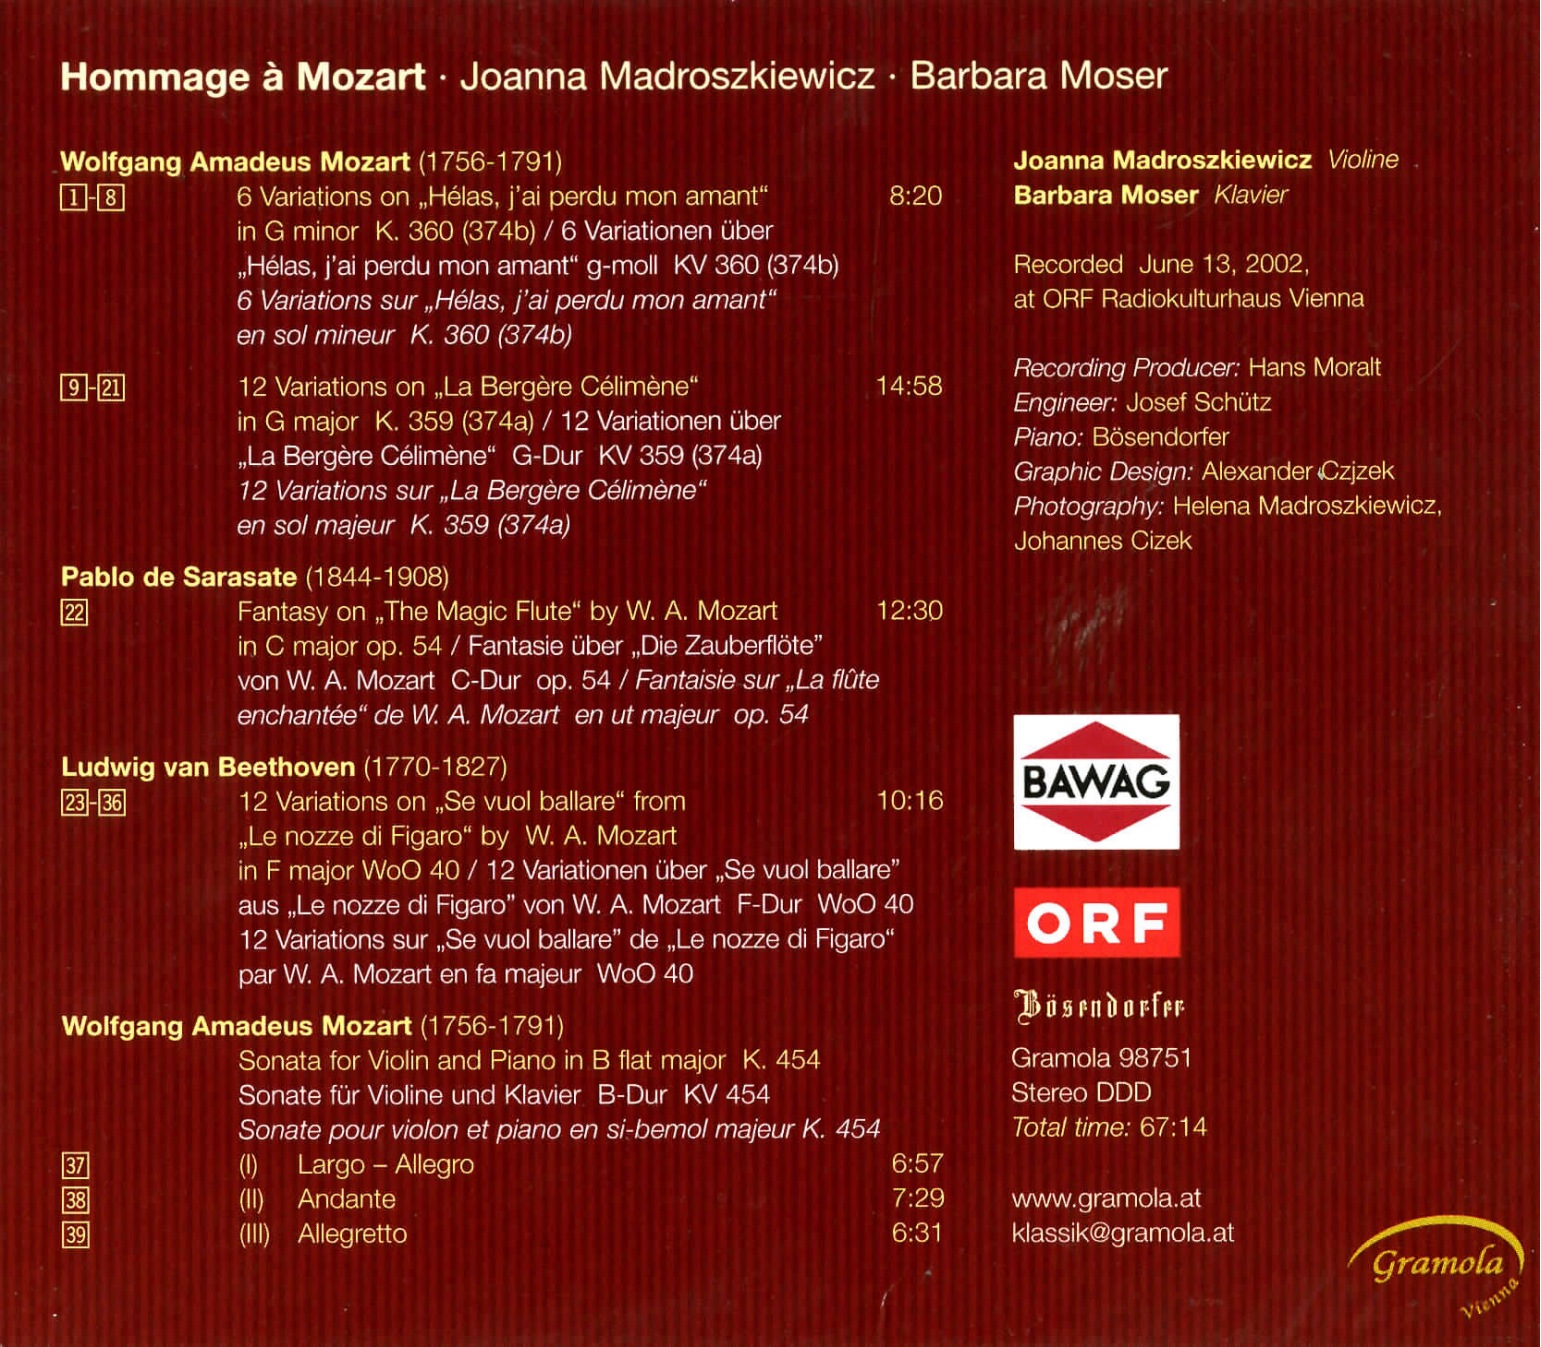 Hommage a Mozart - slide-1